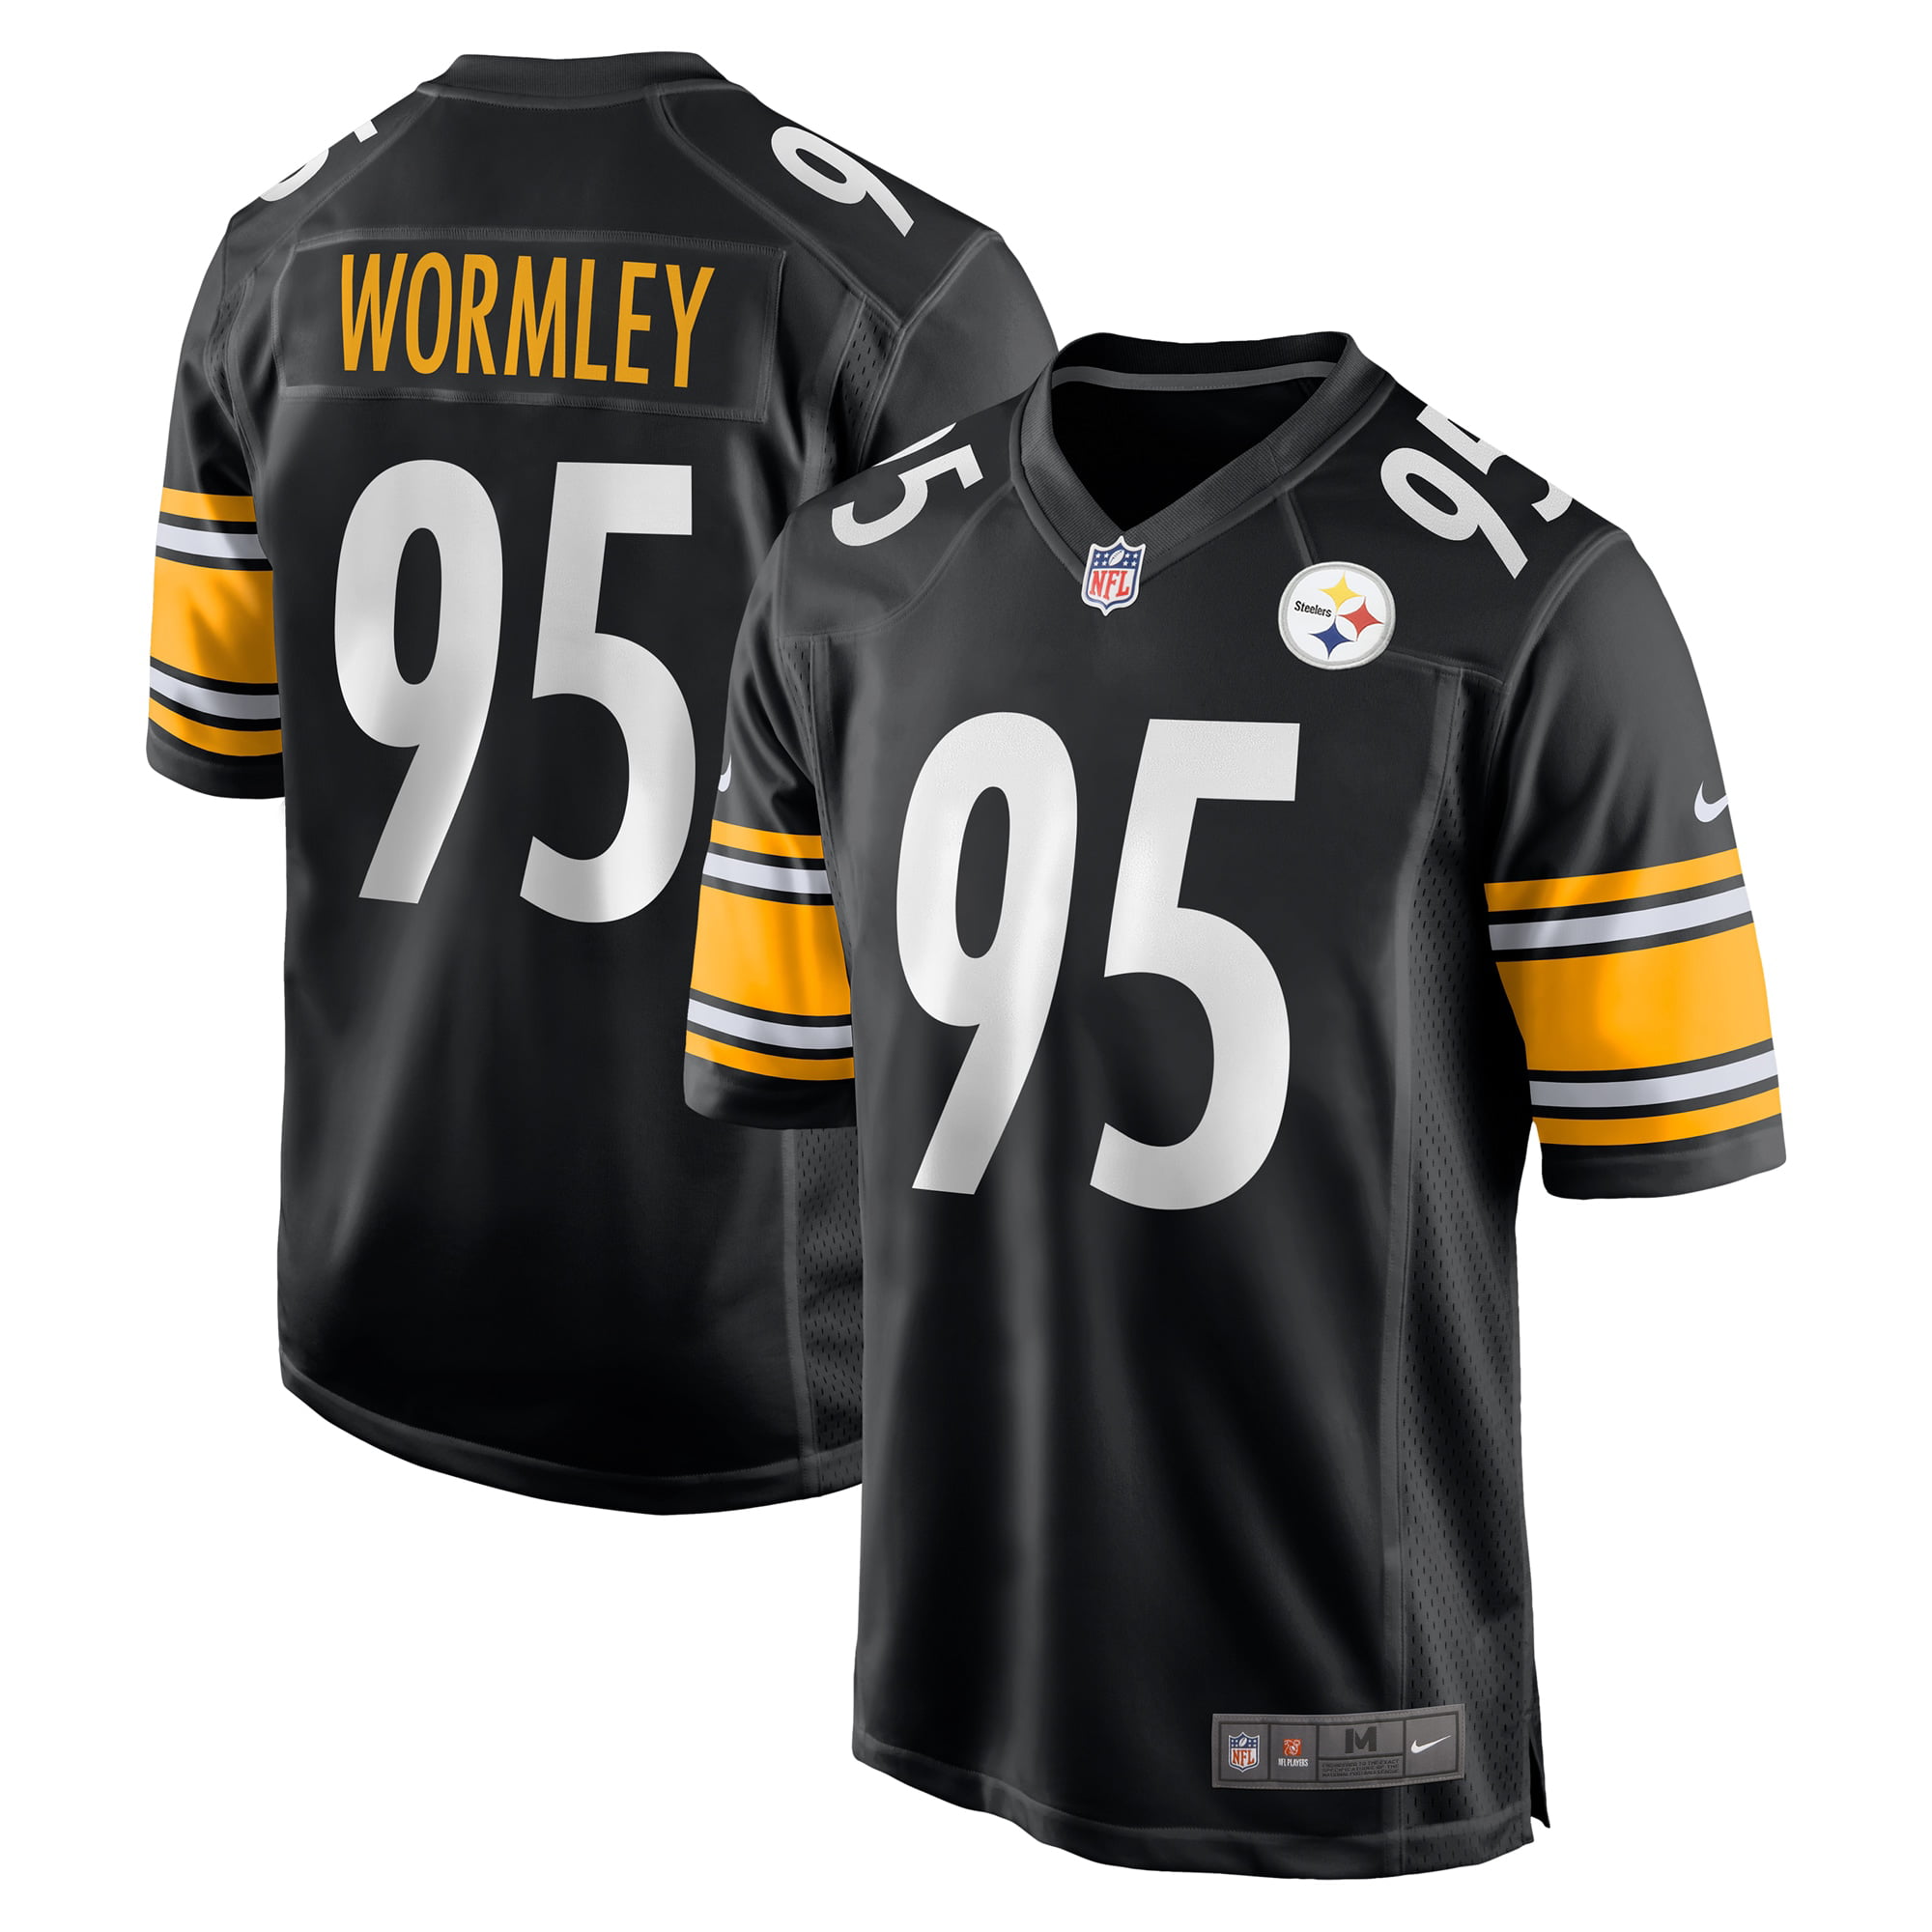 Chris Wormley Pittsburgh Steelers Nike Game Jersey - Black - Walmart.com